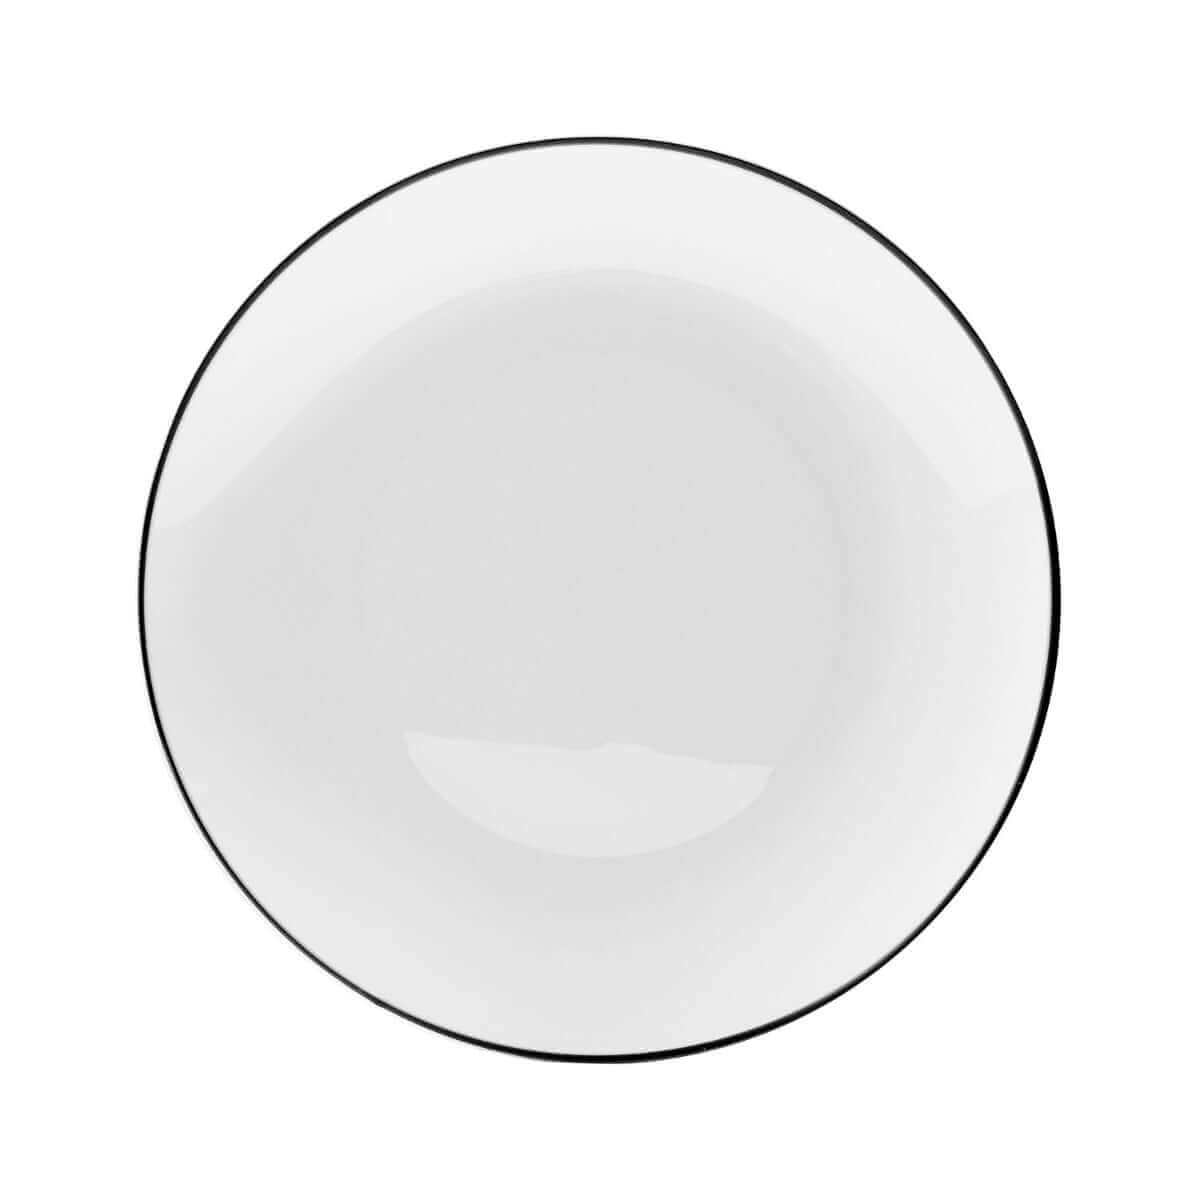 10" White & Black Rim Design Plastic Plates (40 Count) - Yom Tov Settings